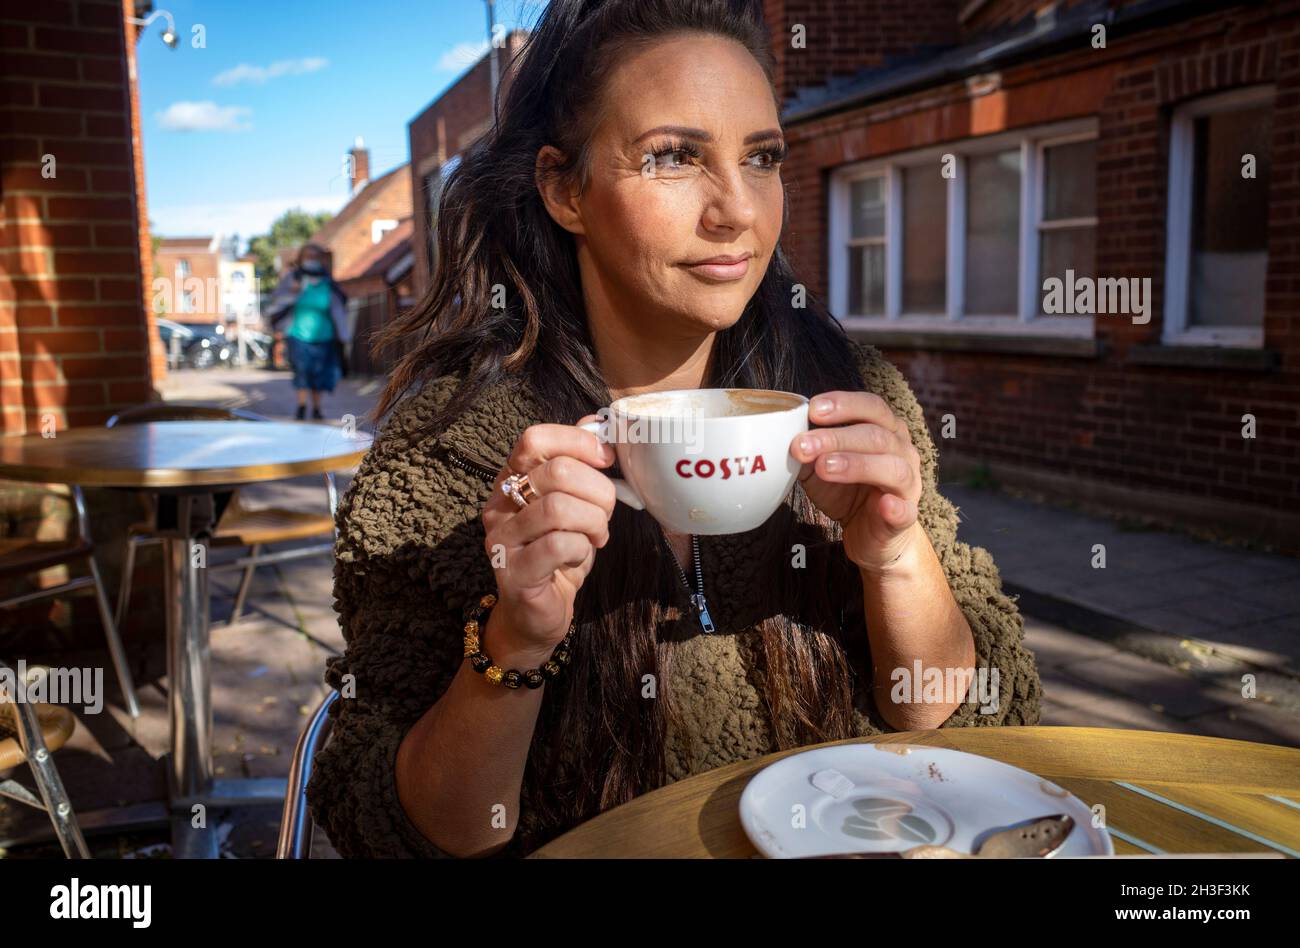 Woman at Costa coffee Stock Photo